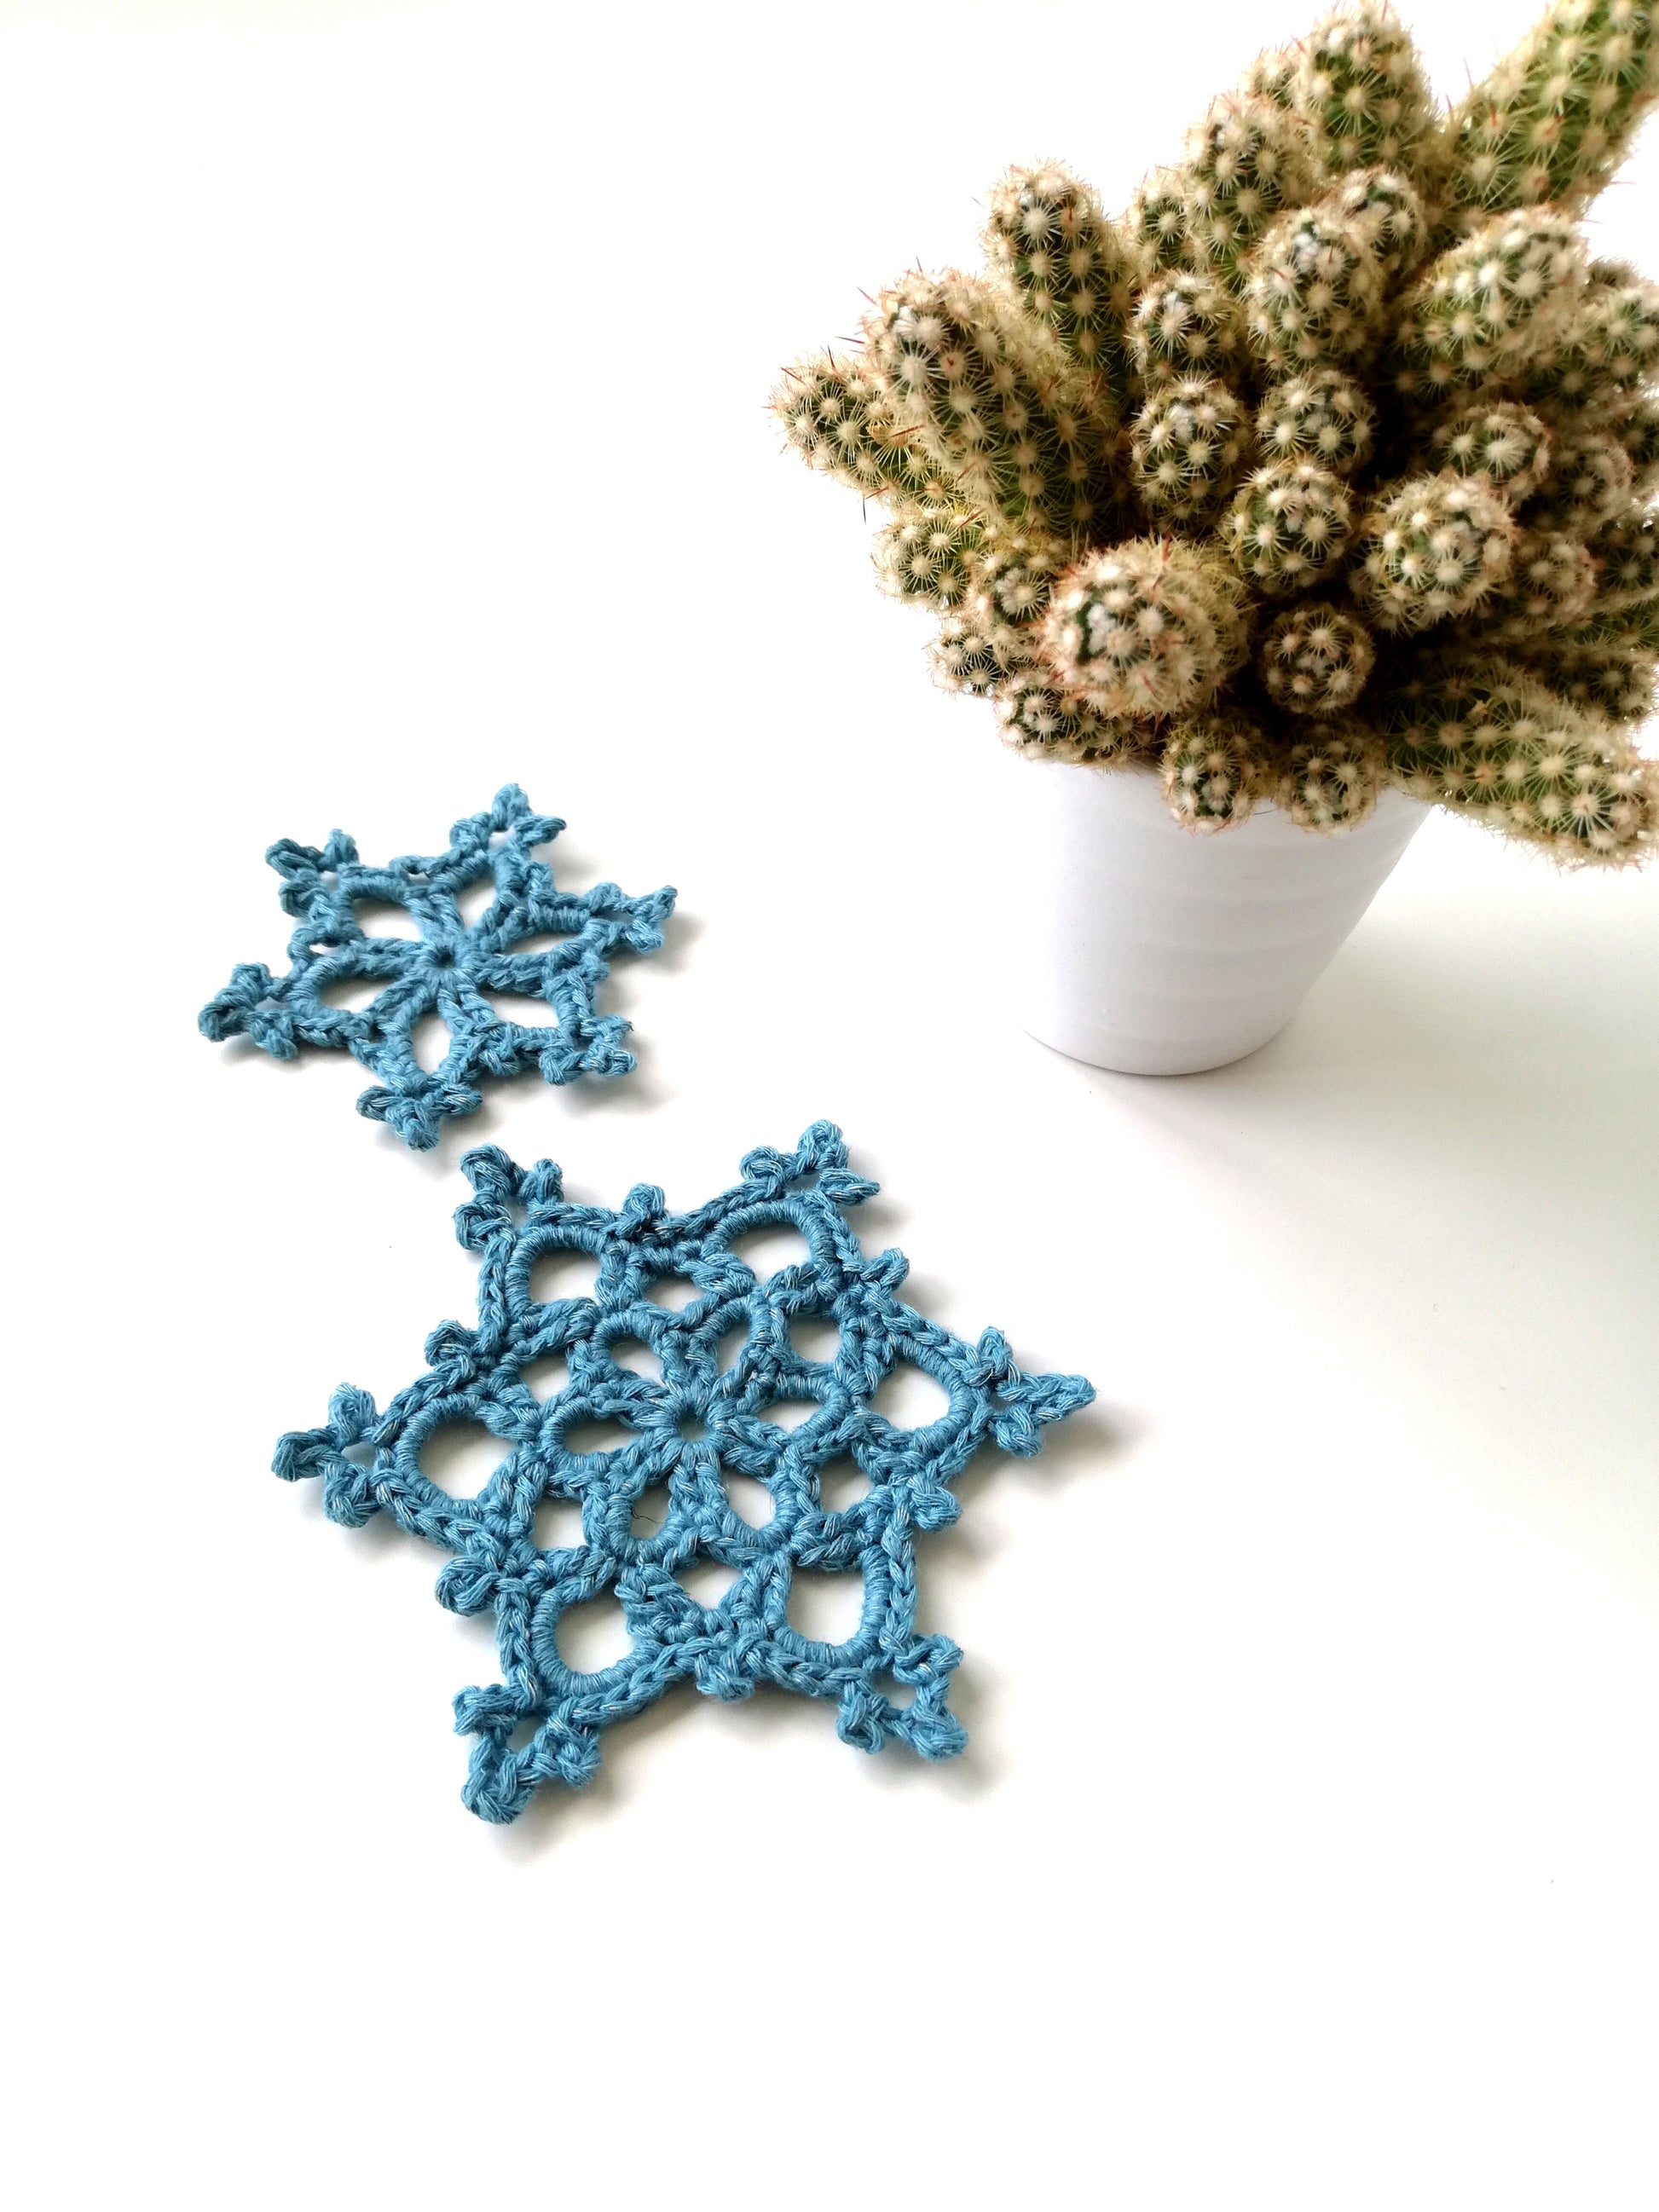 Crochet pattern: snowflakes